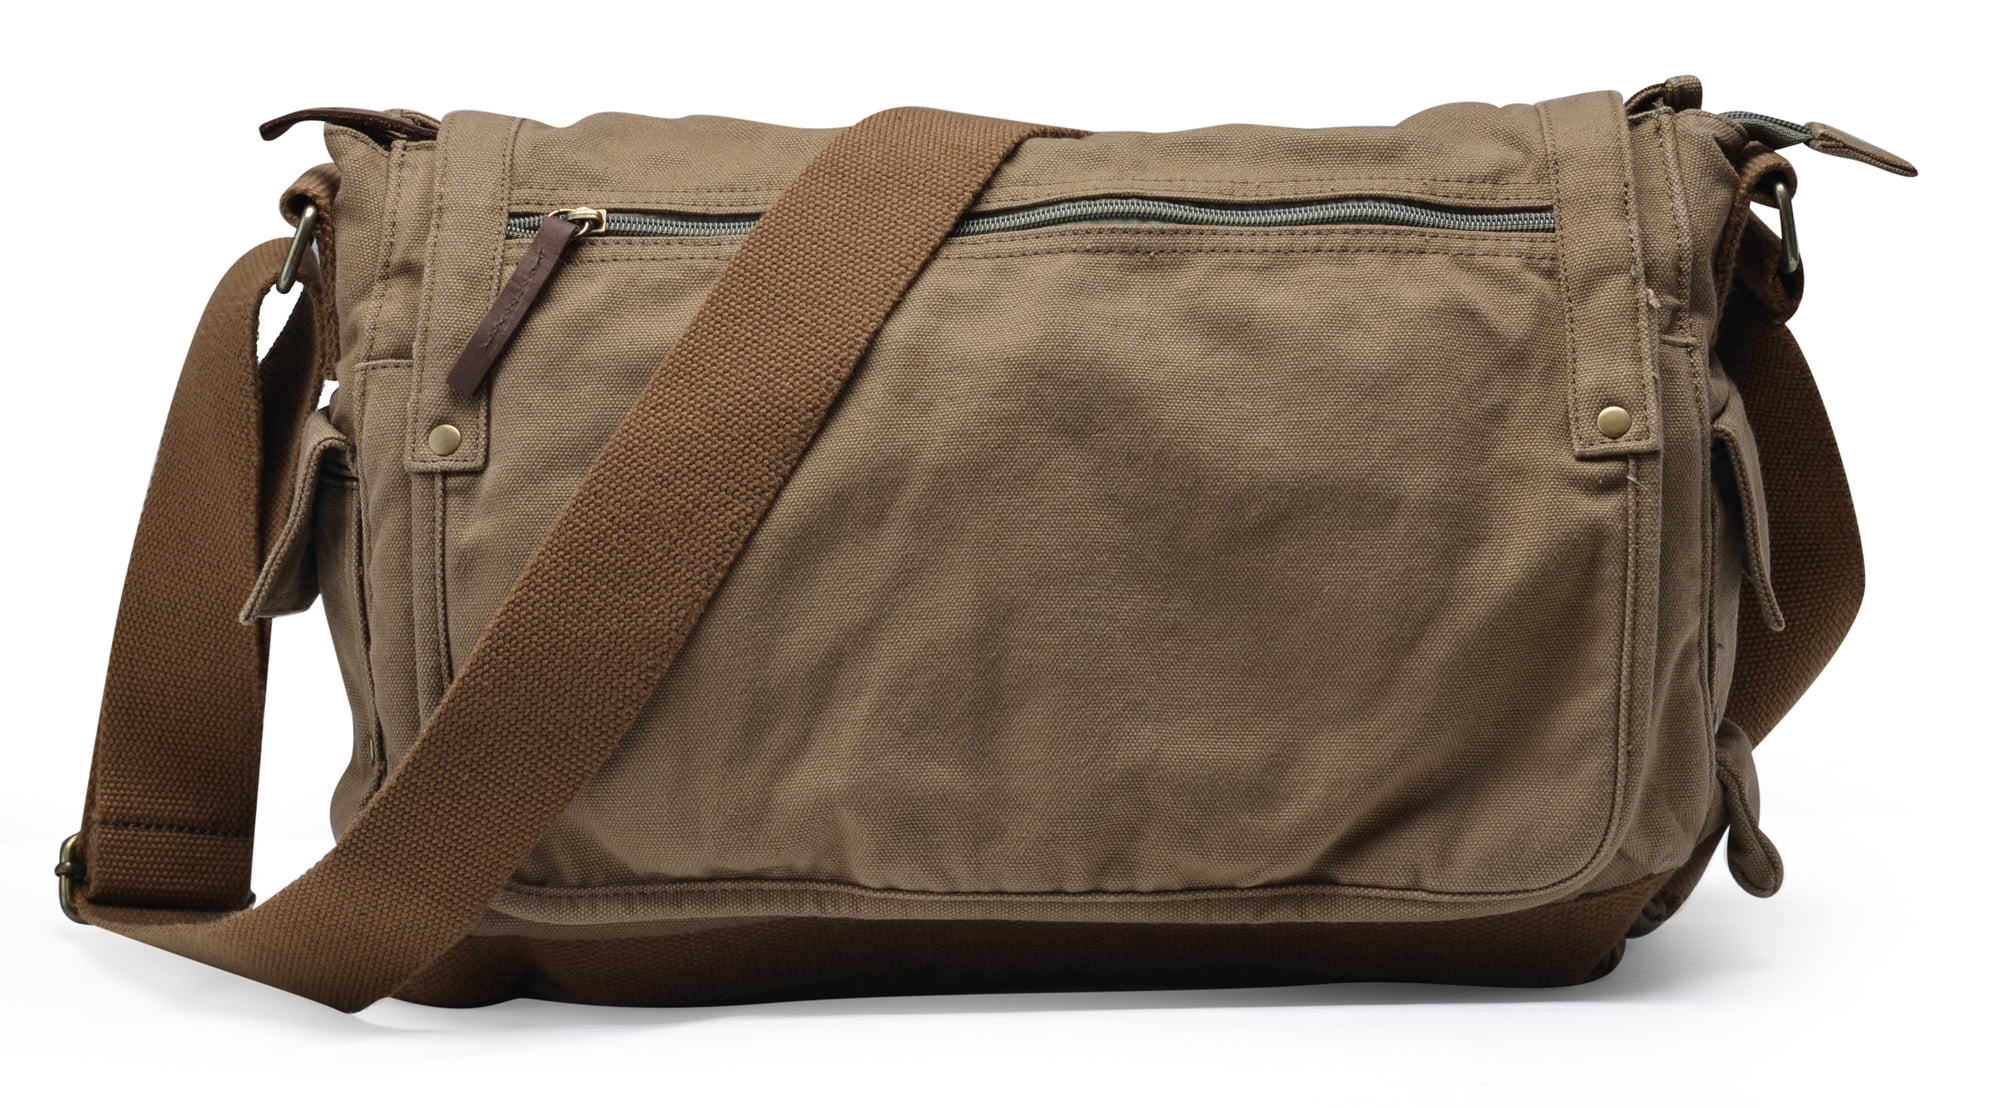 Gootium Vintage Canvas Messenger Bag Classic Cross-body Shoulder Bag, Army Green | Walmart Canada